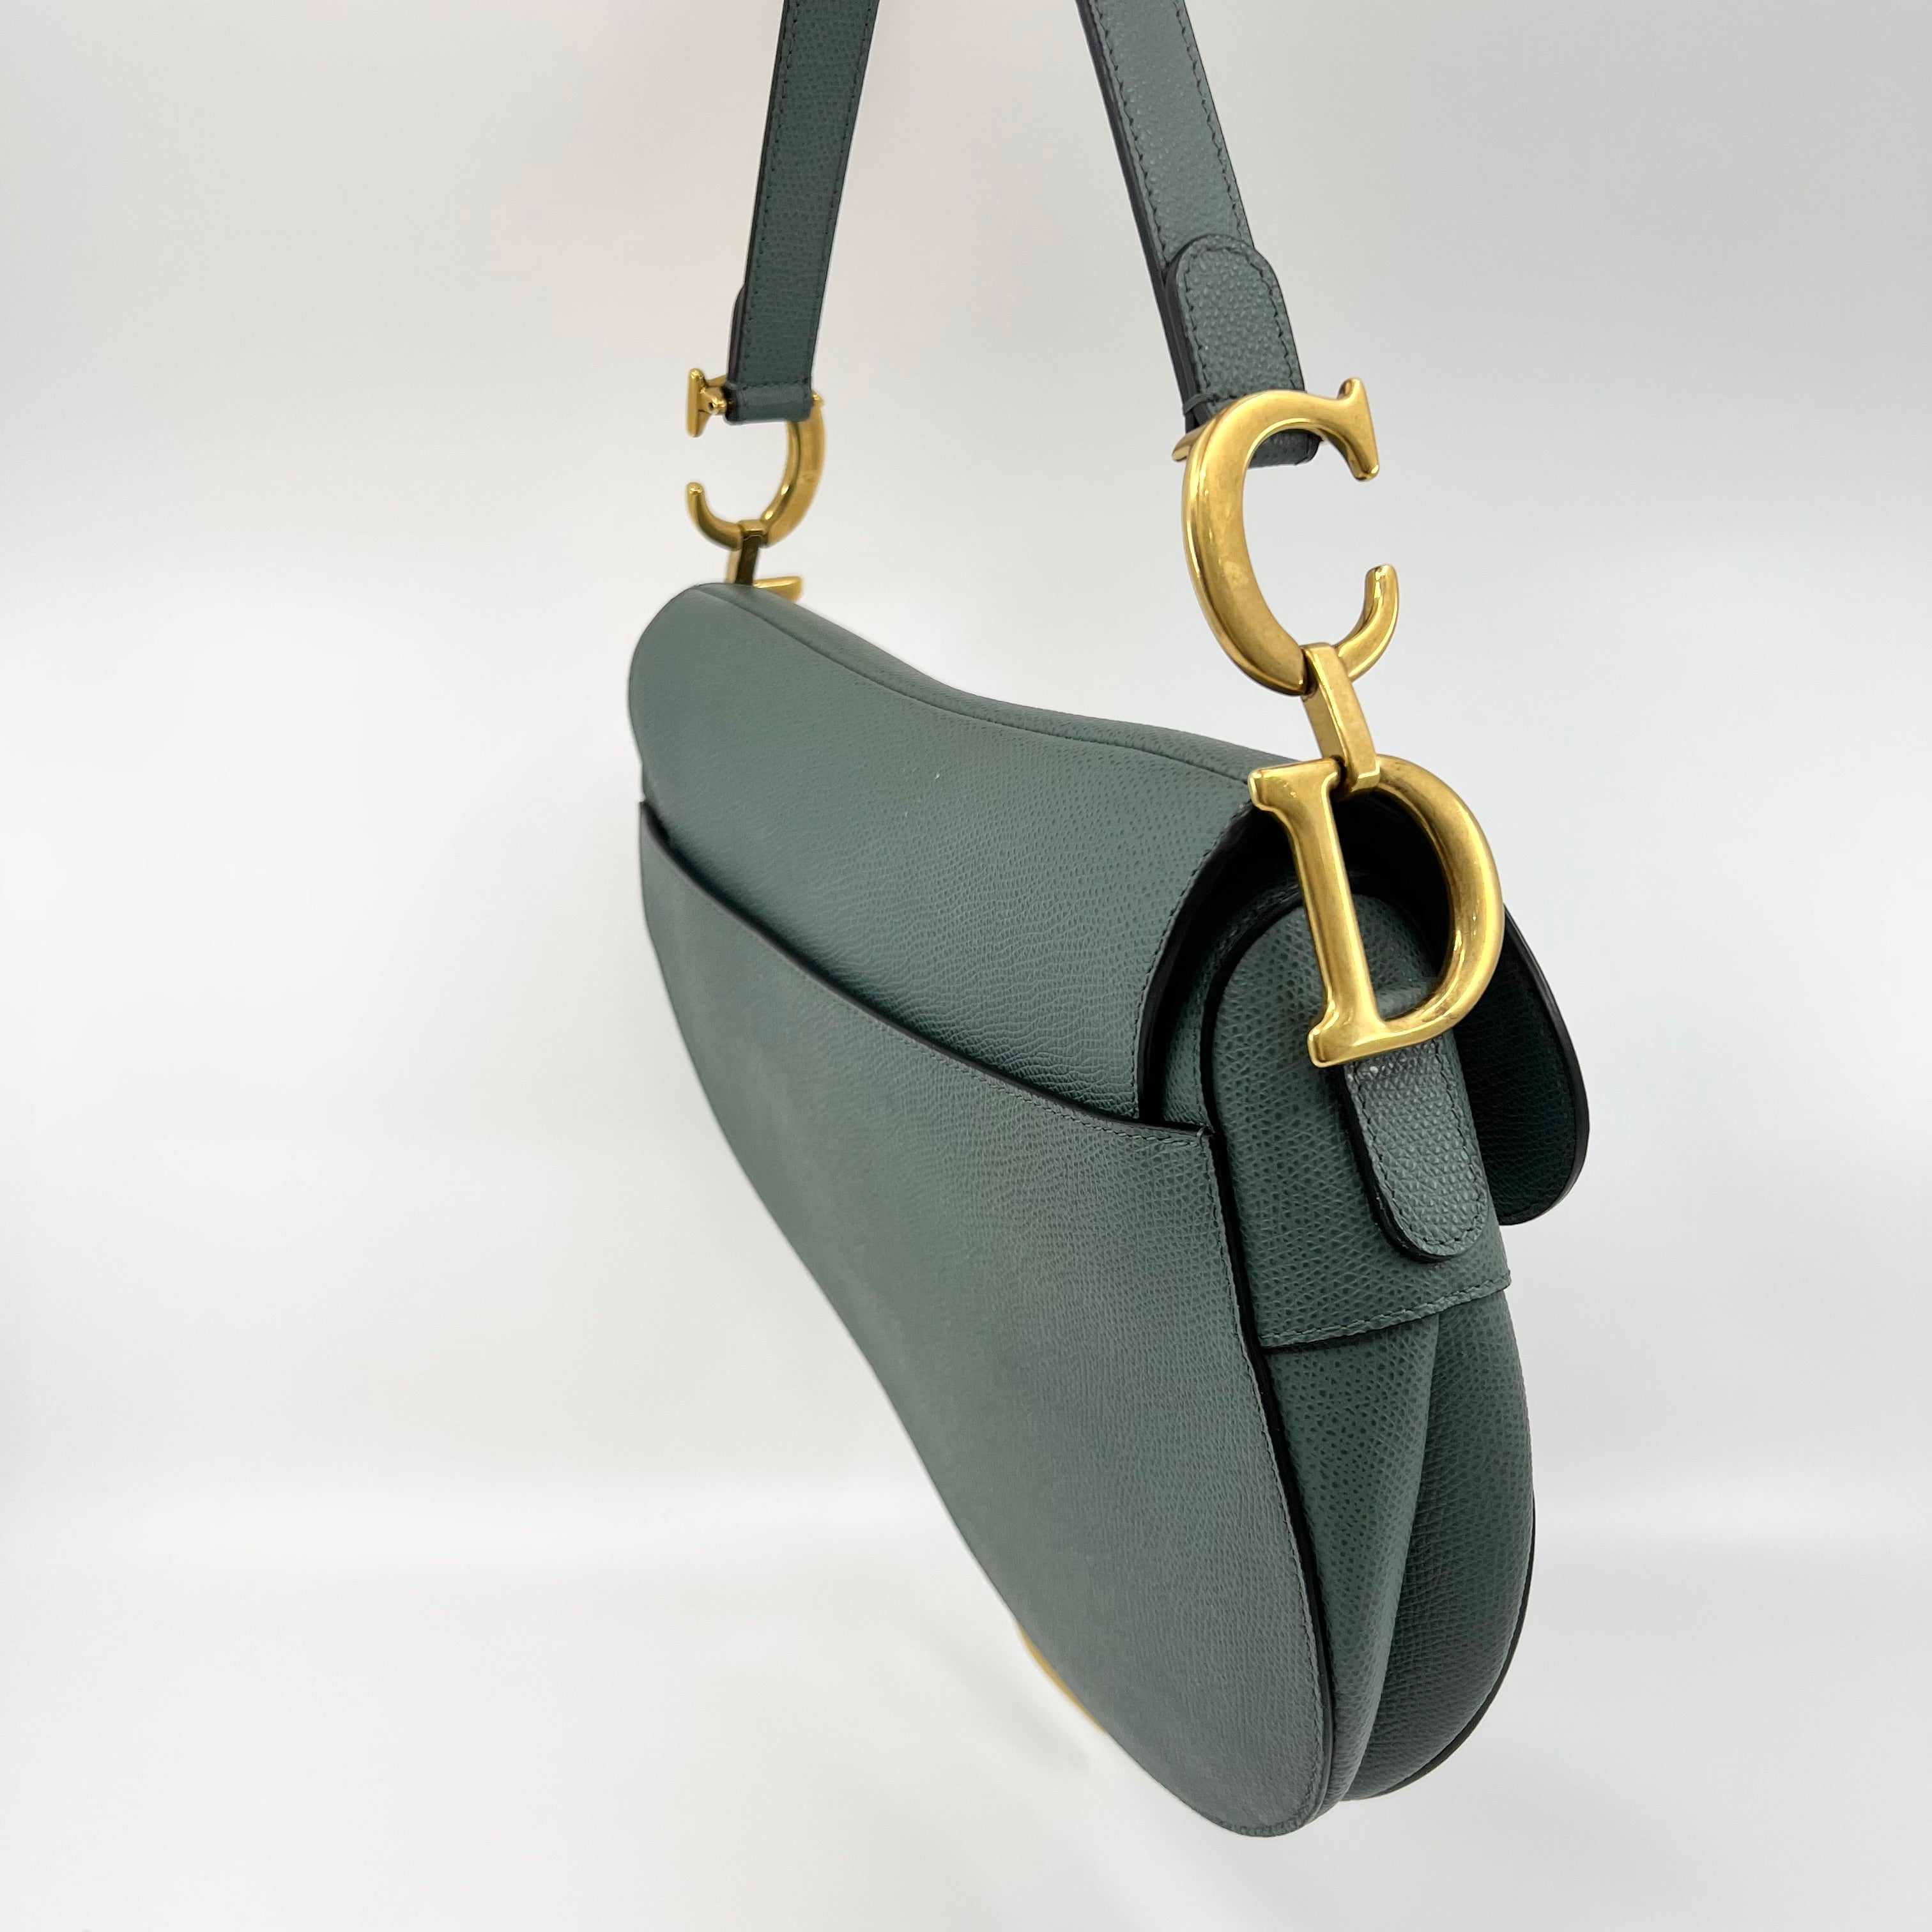 Dior Medium Leather Saddle Bag